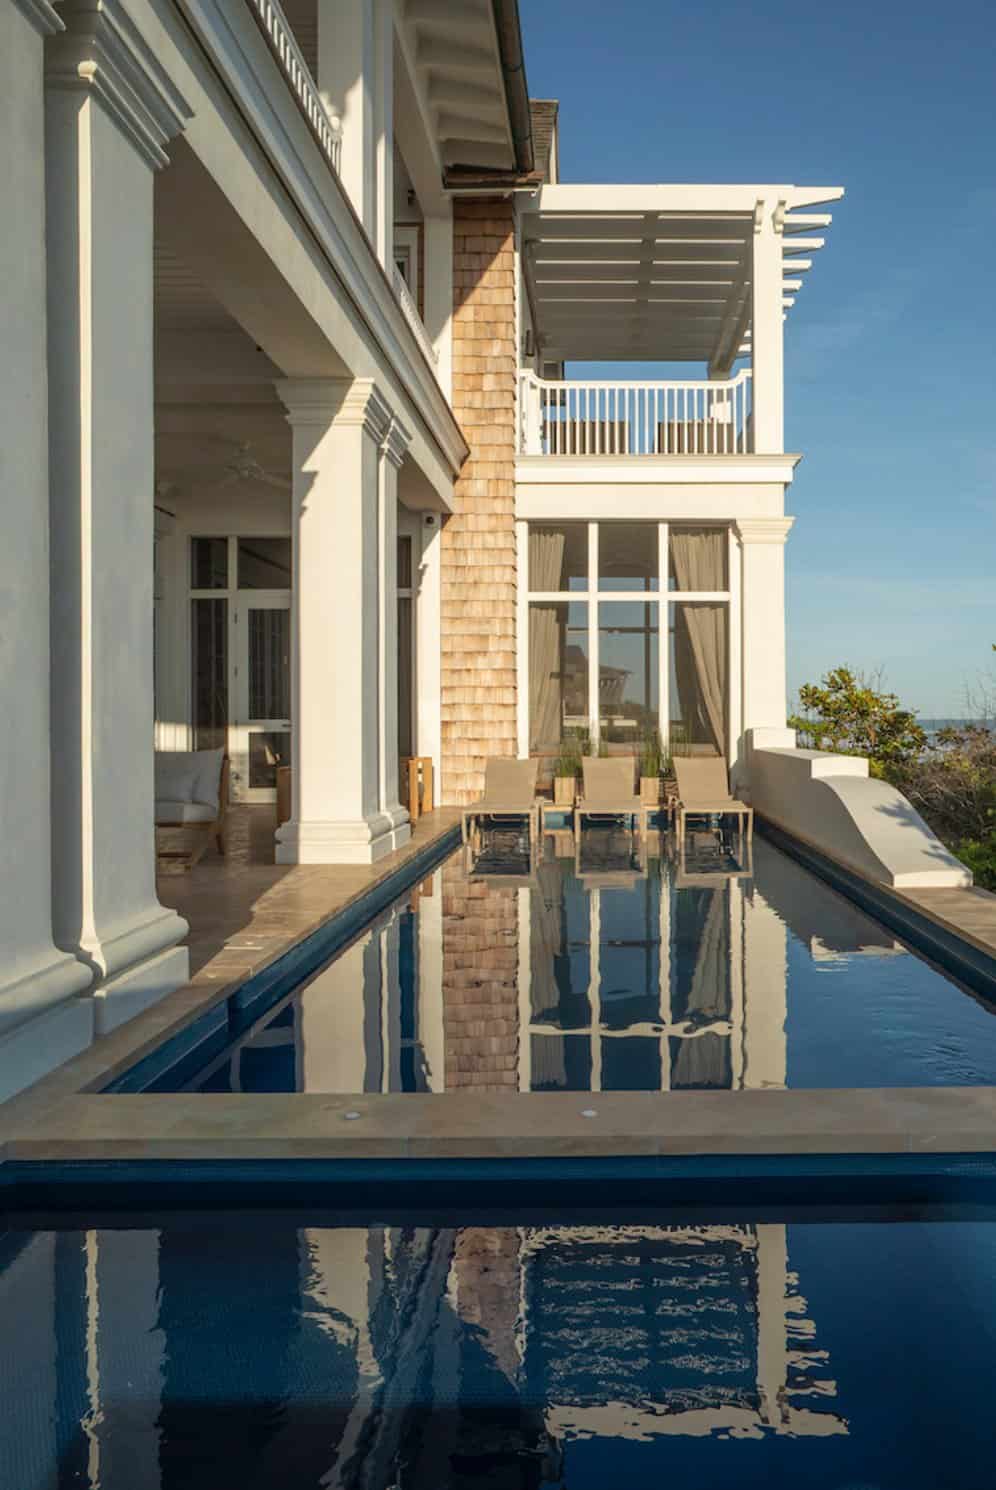 beach-house-patio-with-a-pool